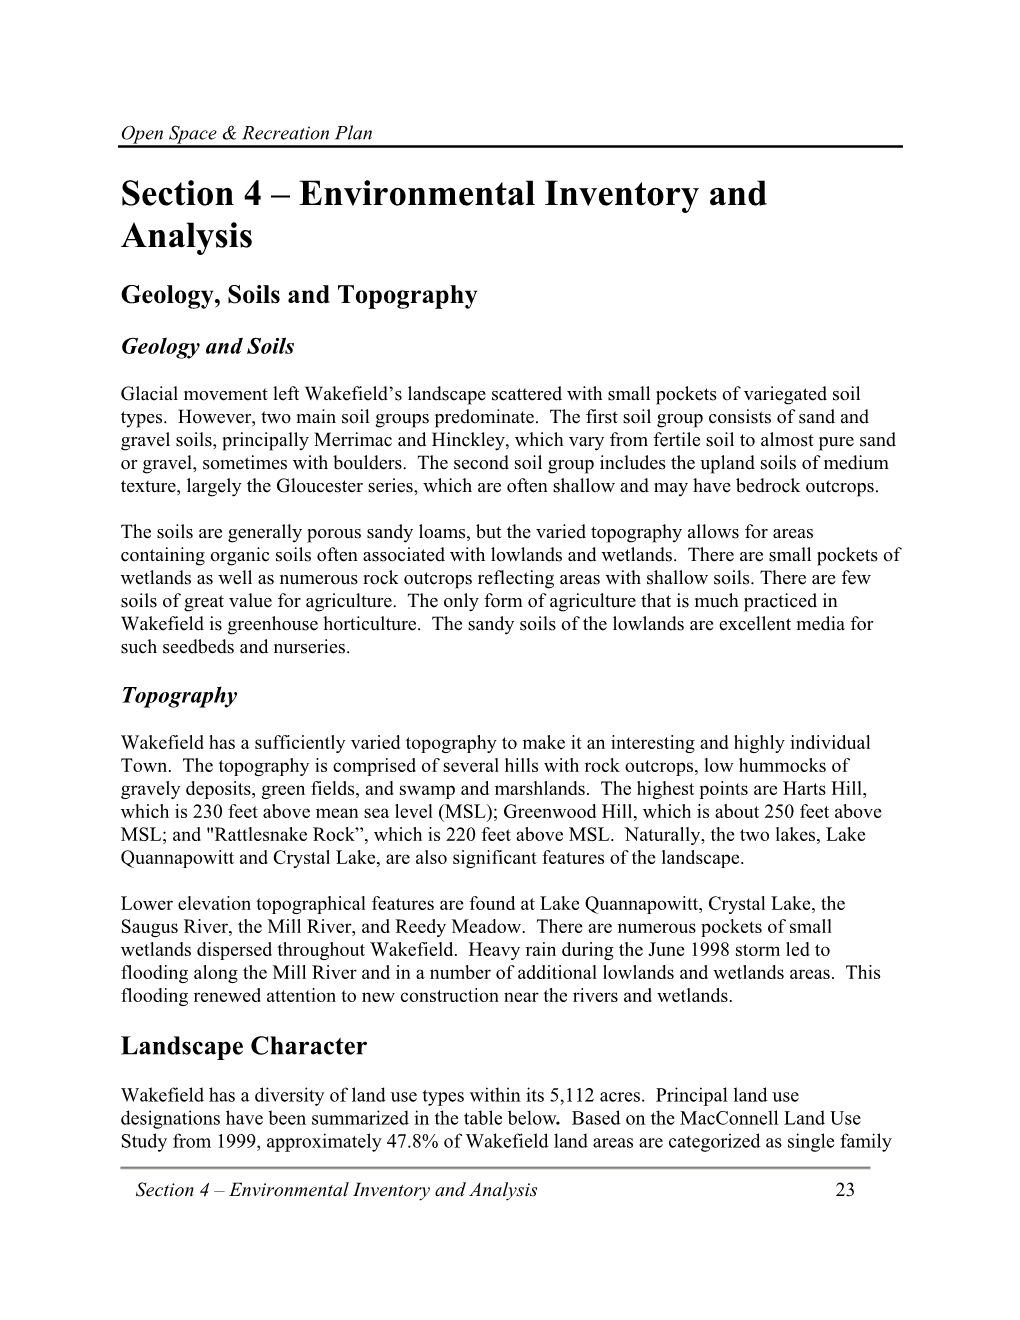 Environmental Inventory and Analysis